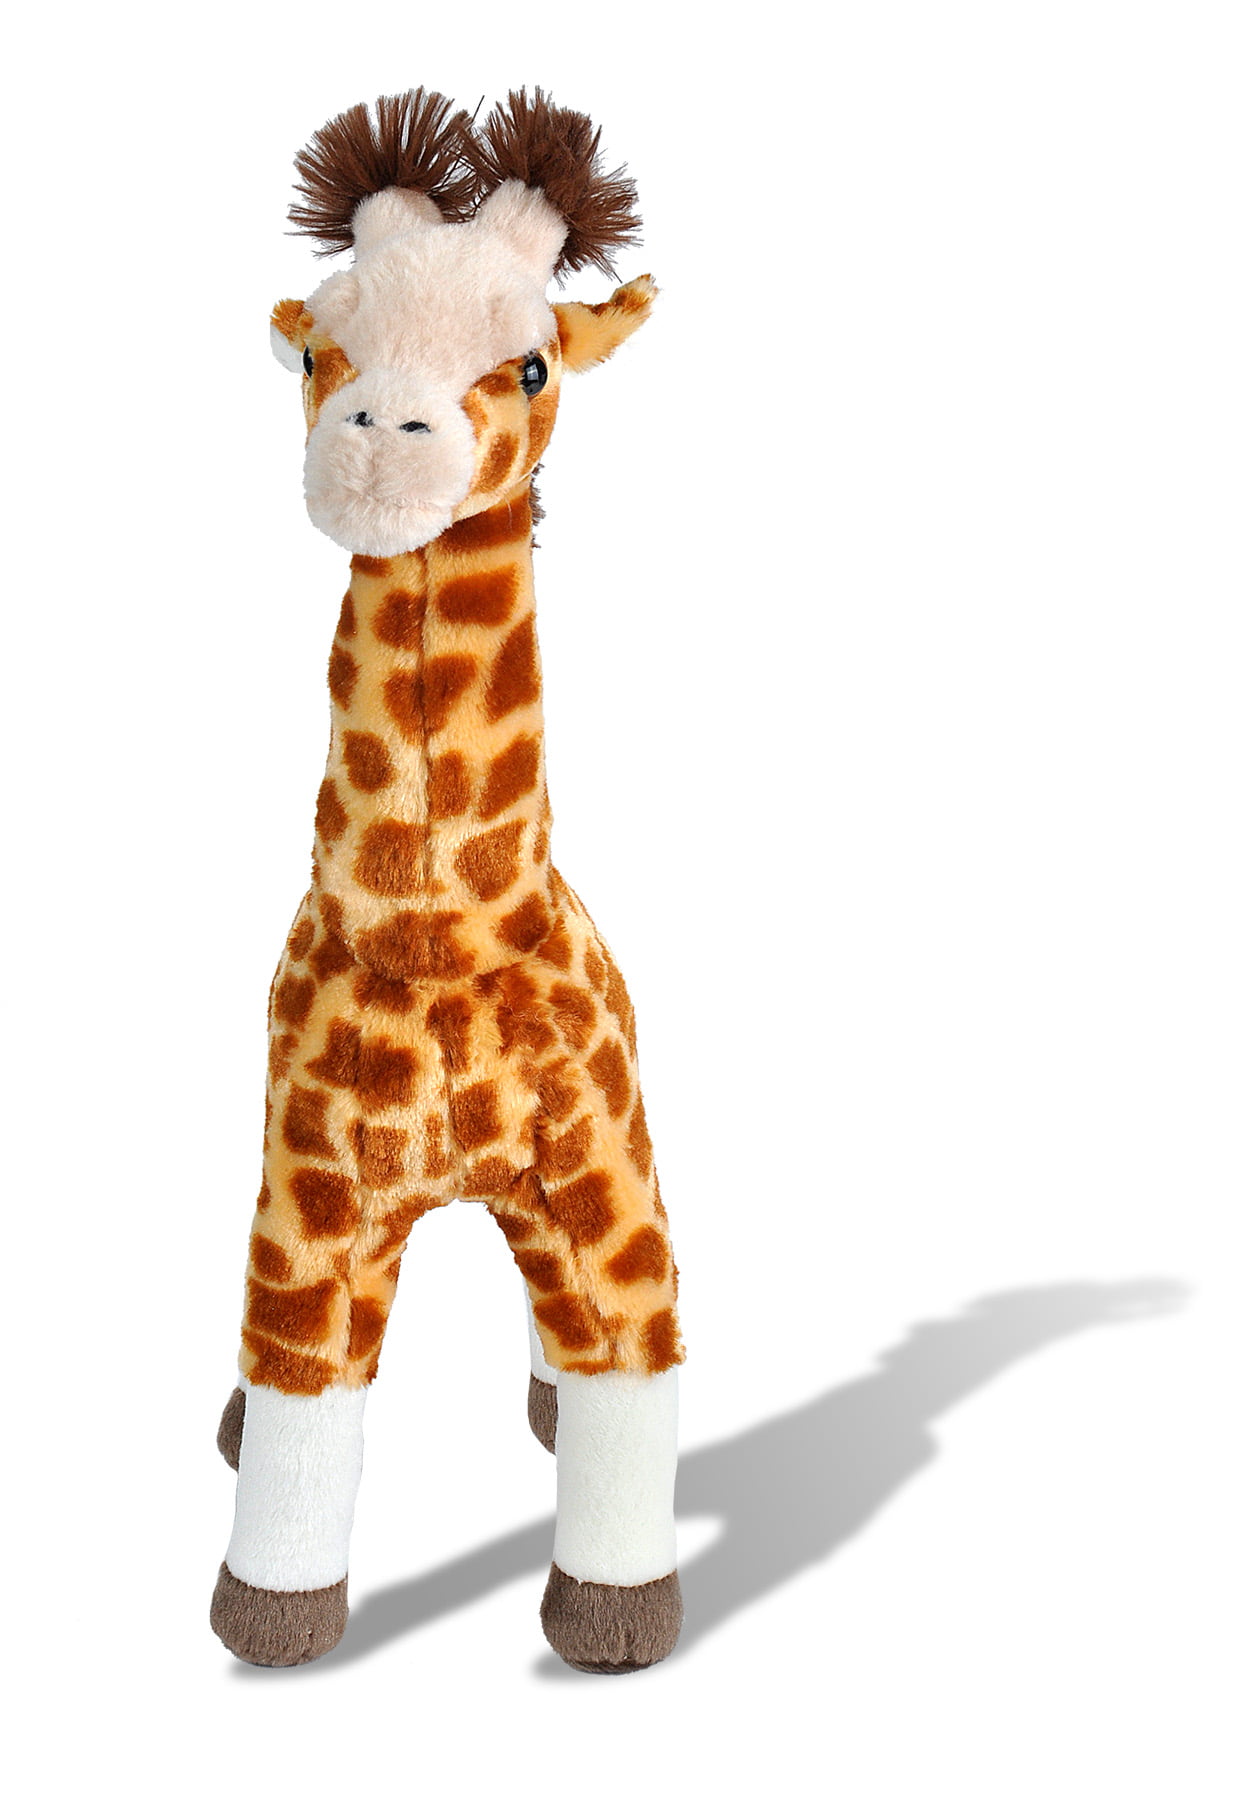 Giraffe stuffed animal Wild Republic 12"/30cm soft plush toy Cuddlekins NEW 